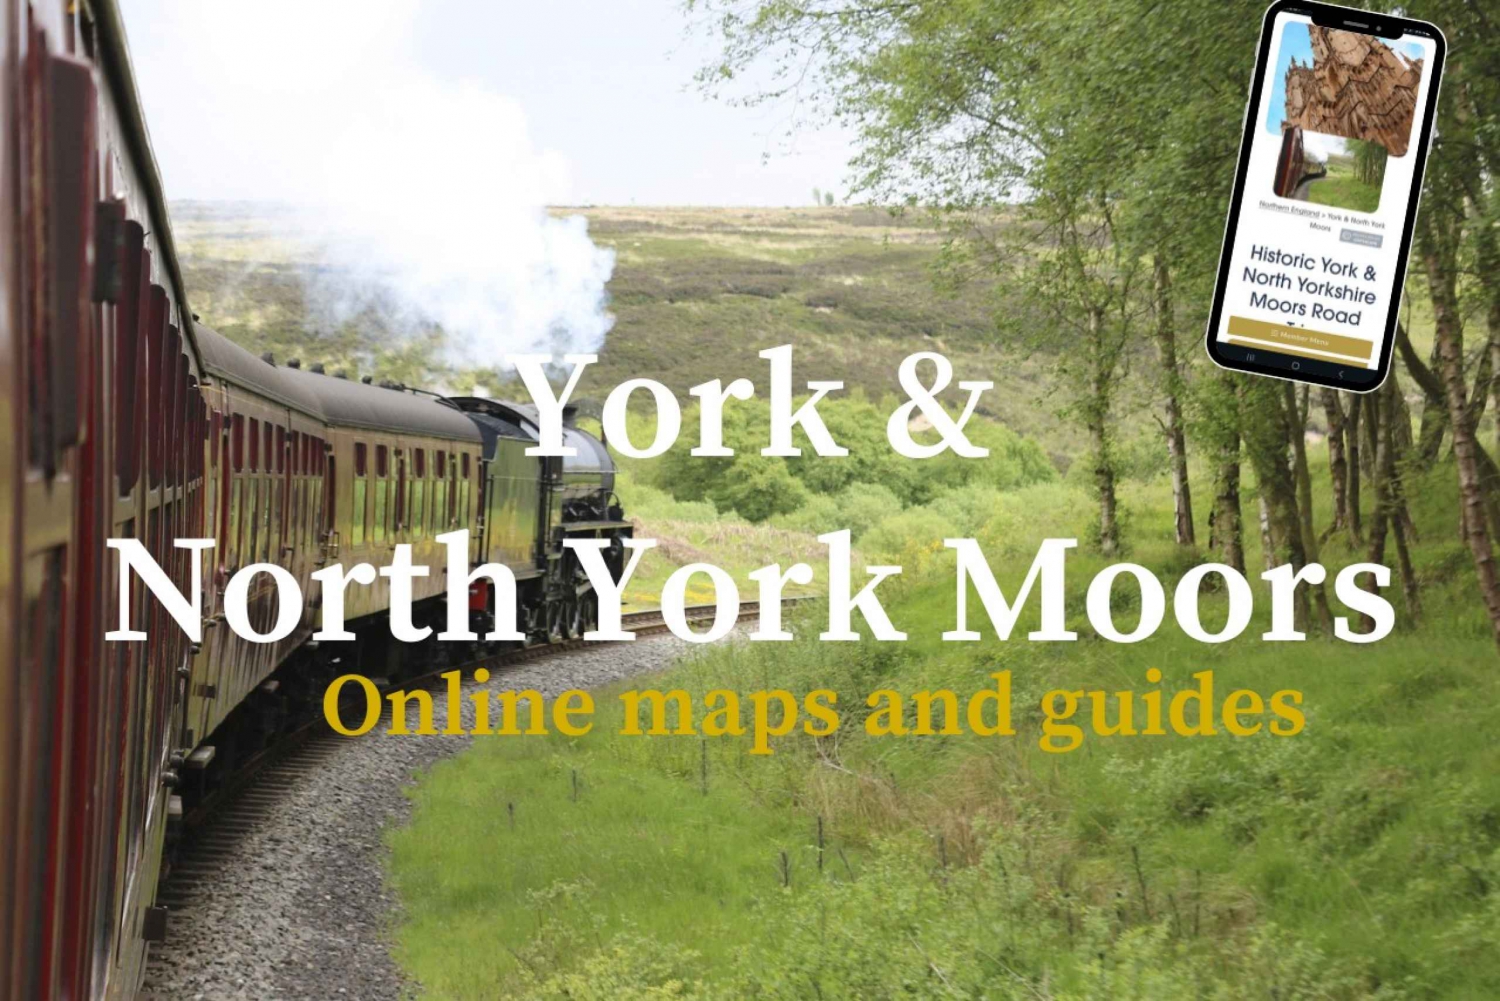 York & North Yorkshire Moors (Interactive Guidebook)